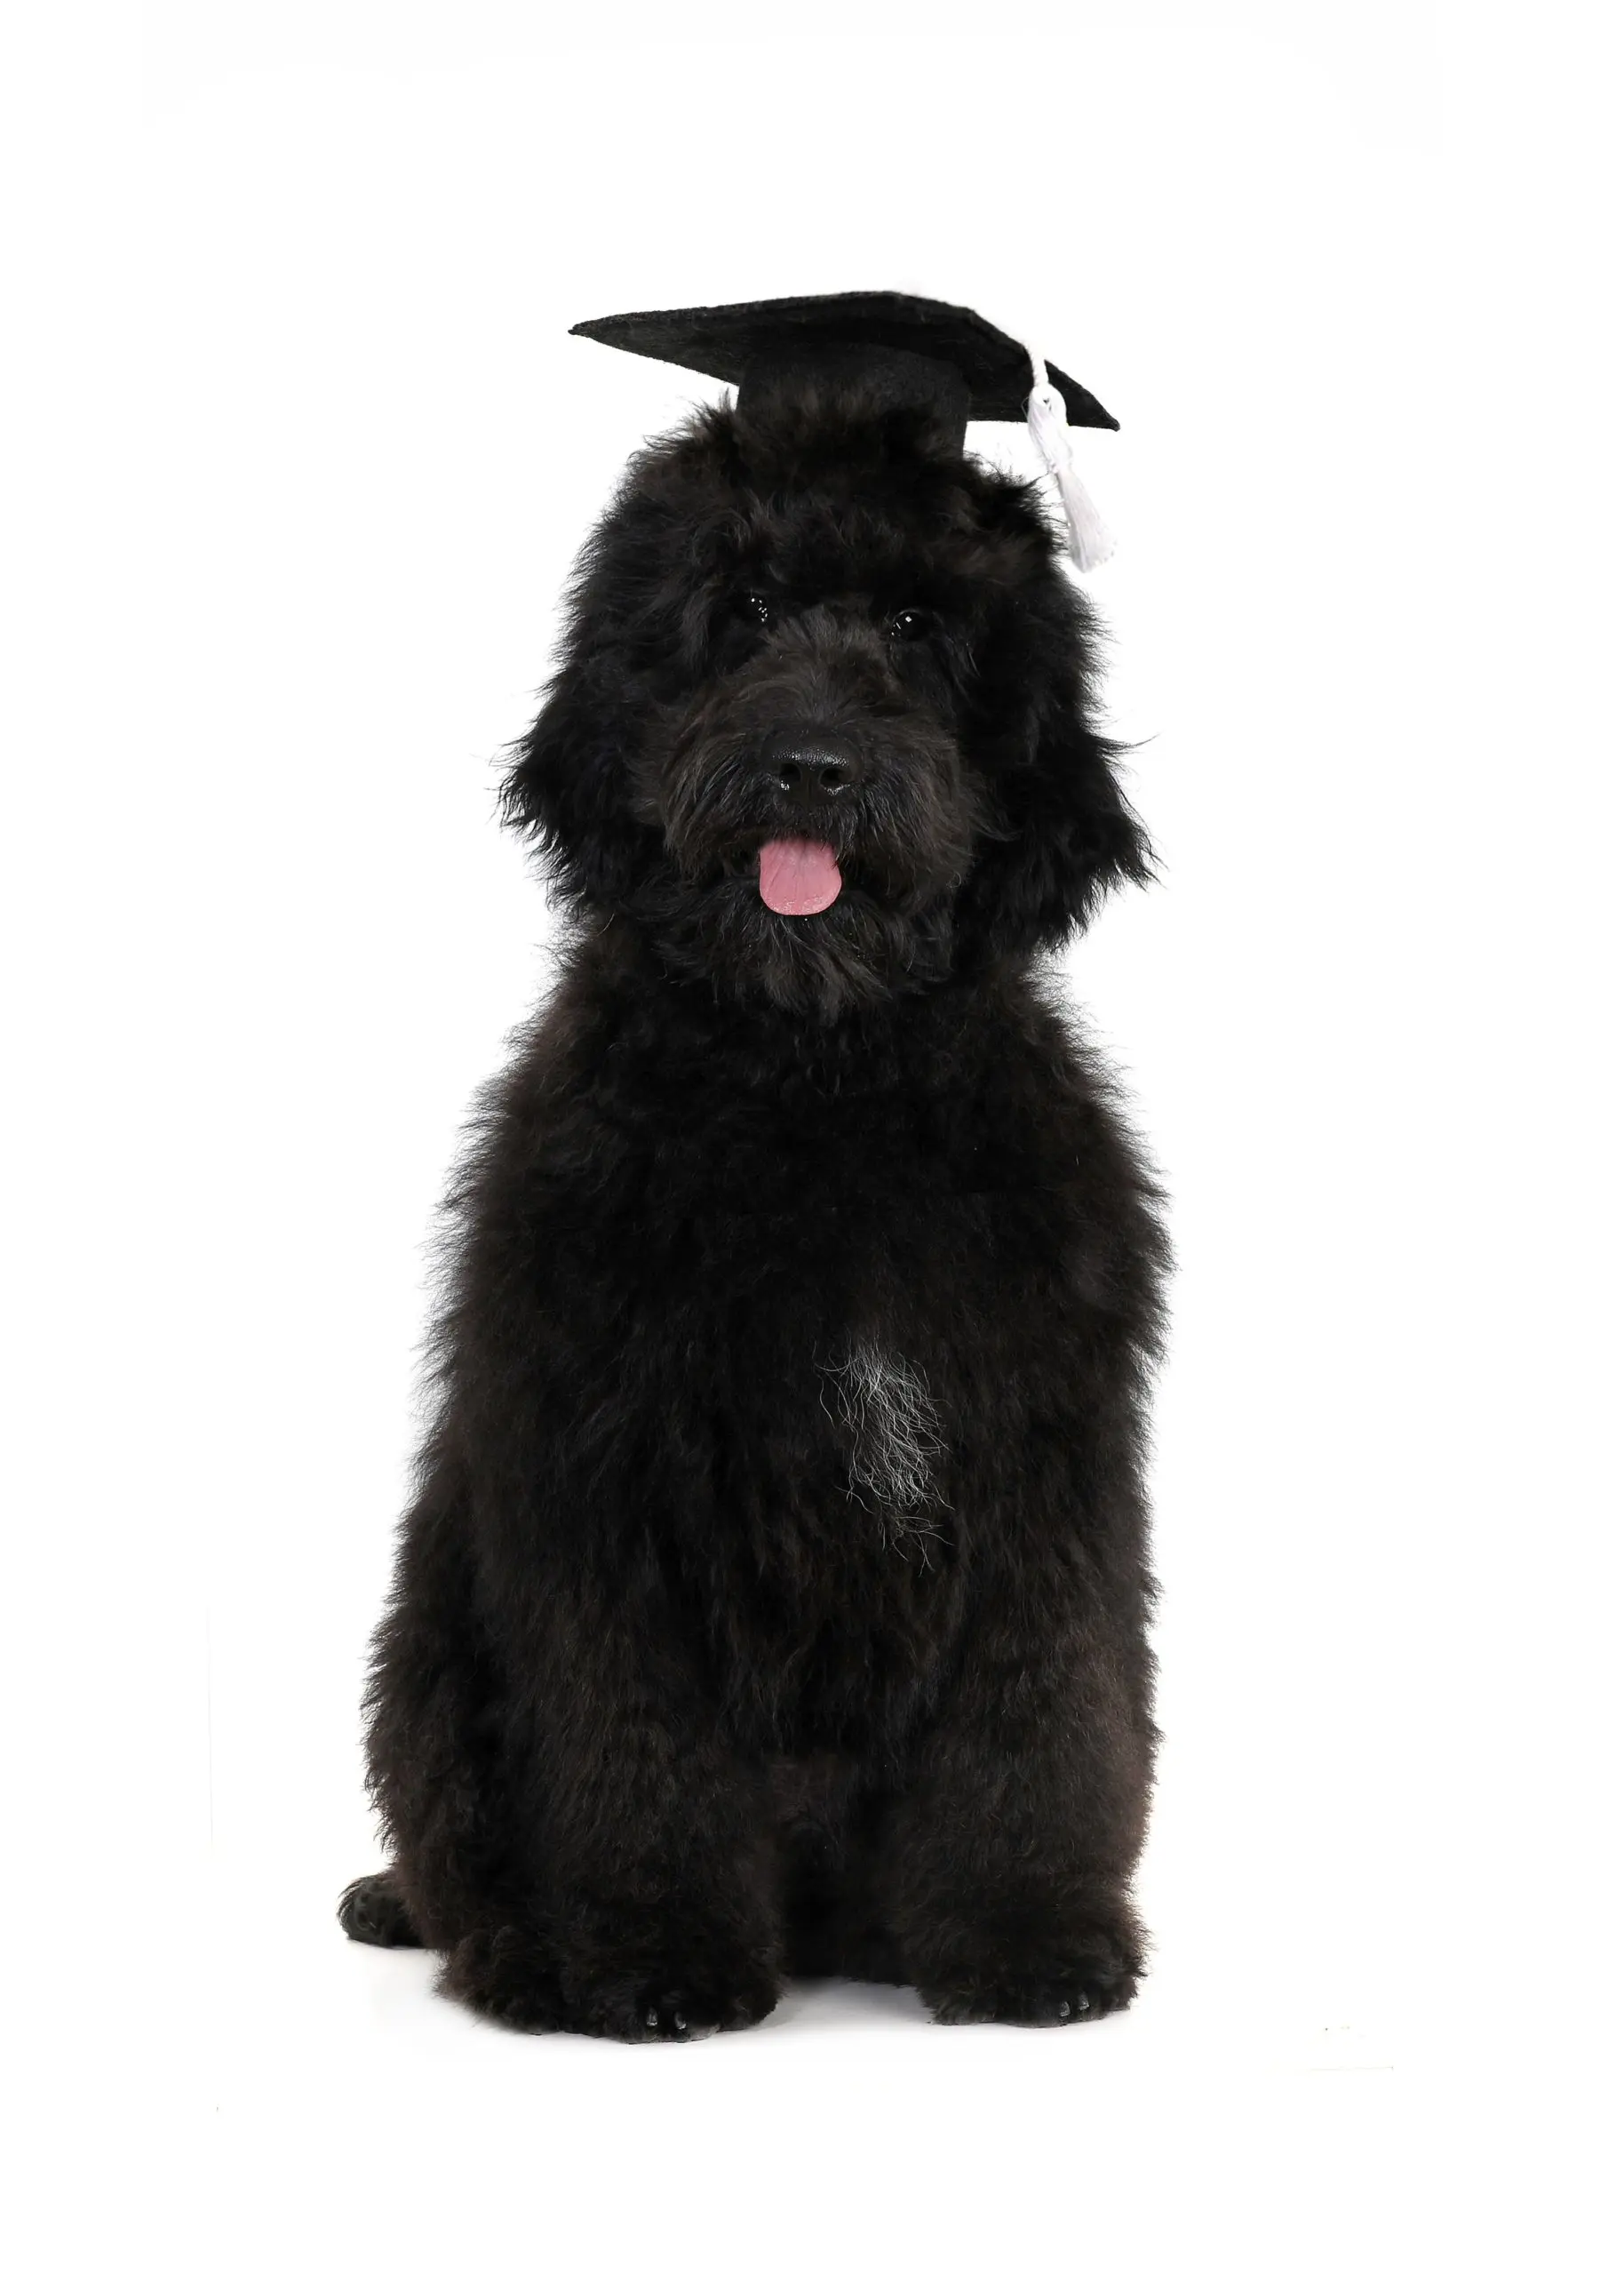 black English teddy bear goldendoodle with graduation cap on